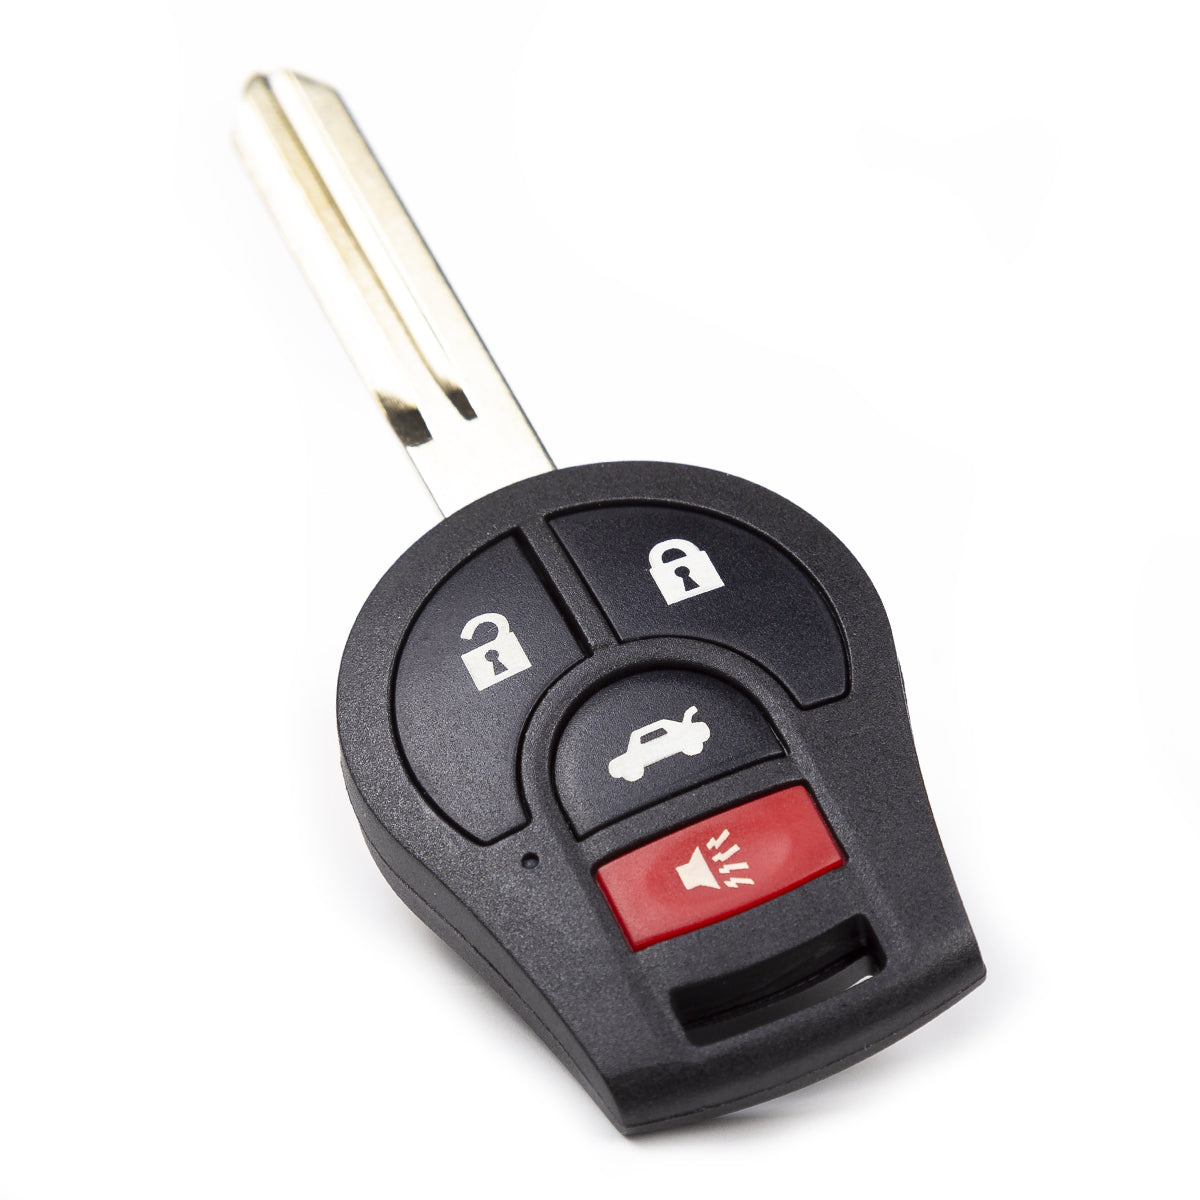 2008 Nissan Pathfinder Key Fob - Aftermarket - 4 Buttons Fob FCC# CWTWB1U751 - ID46 Chip